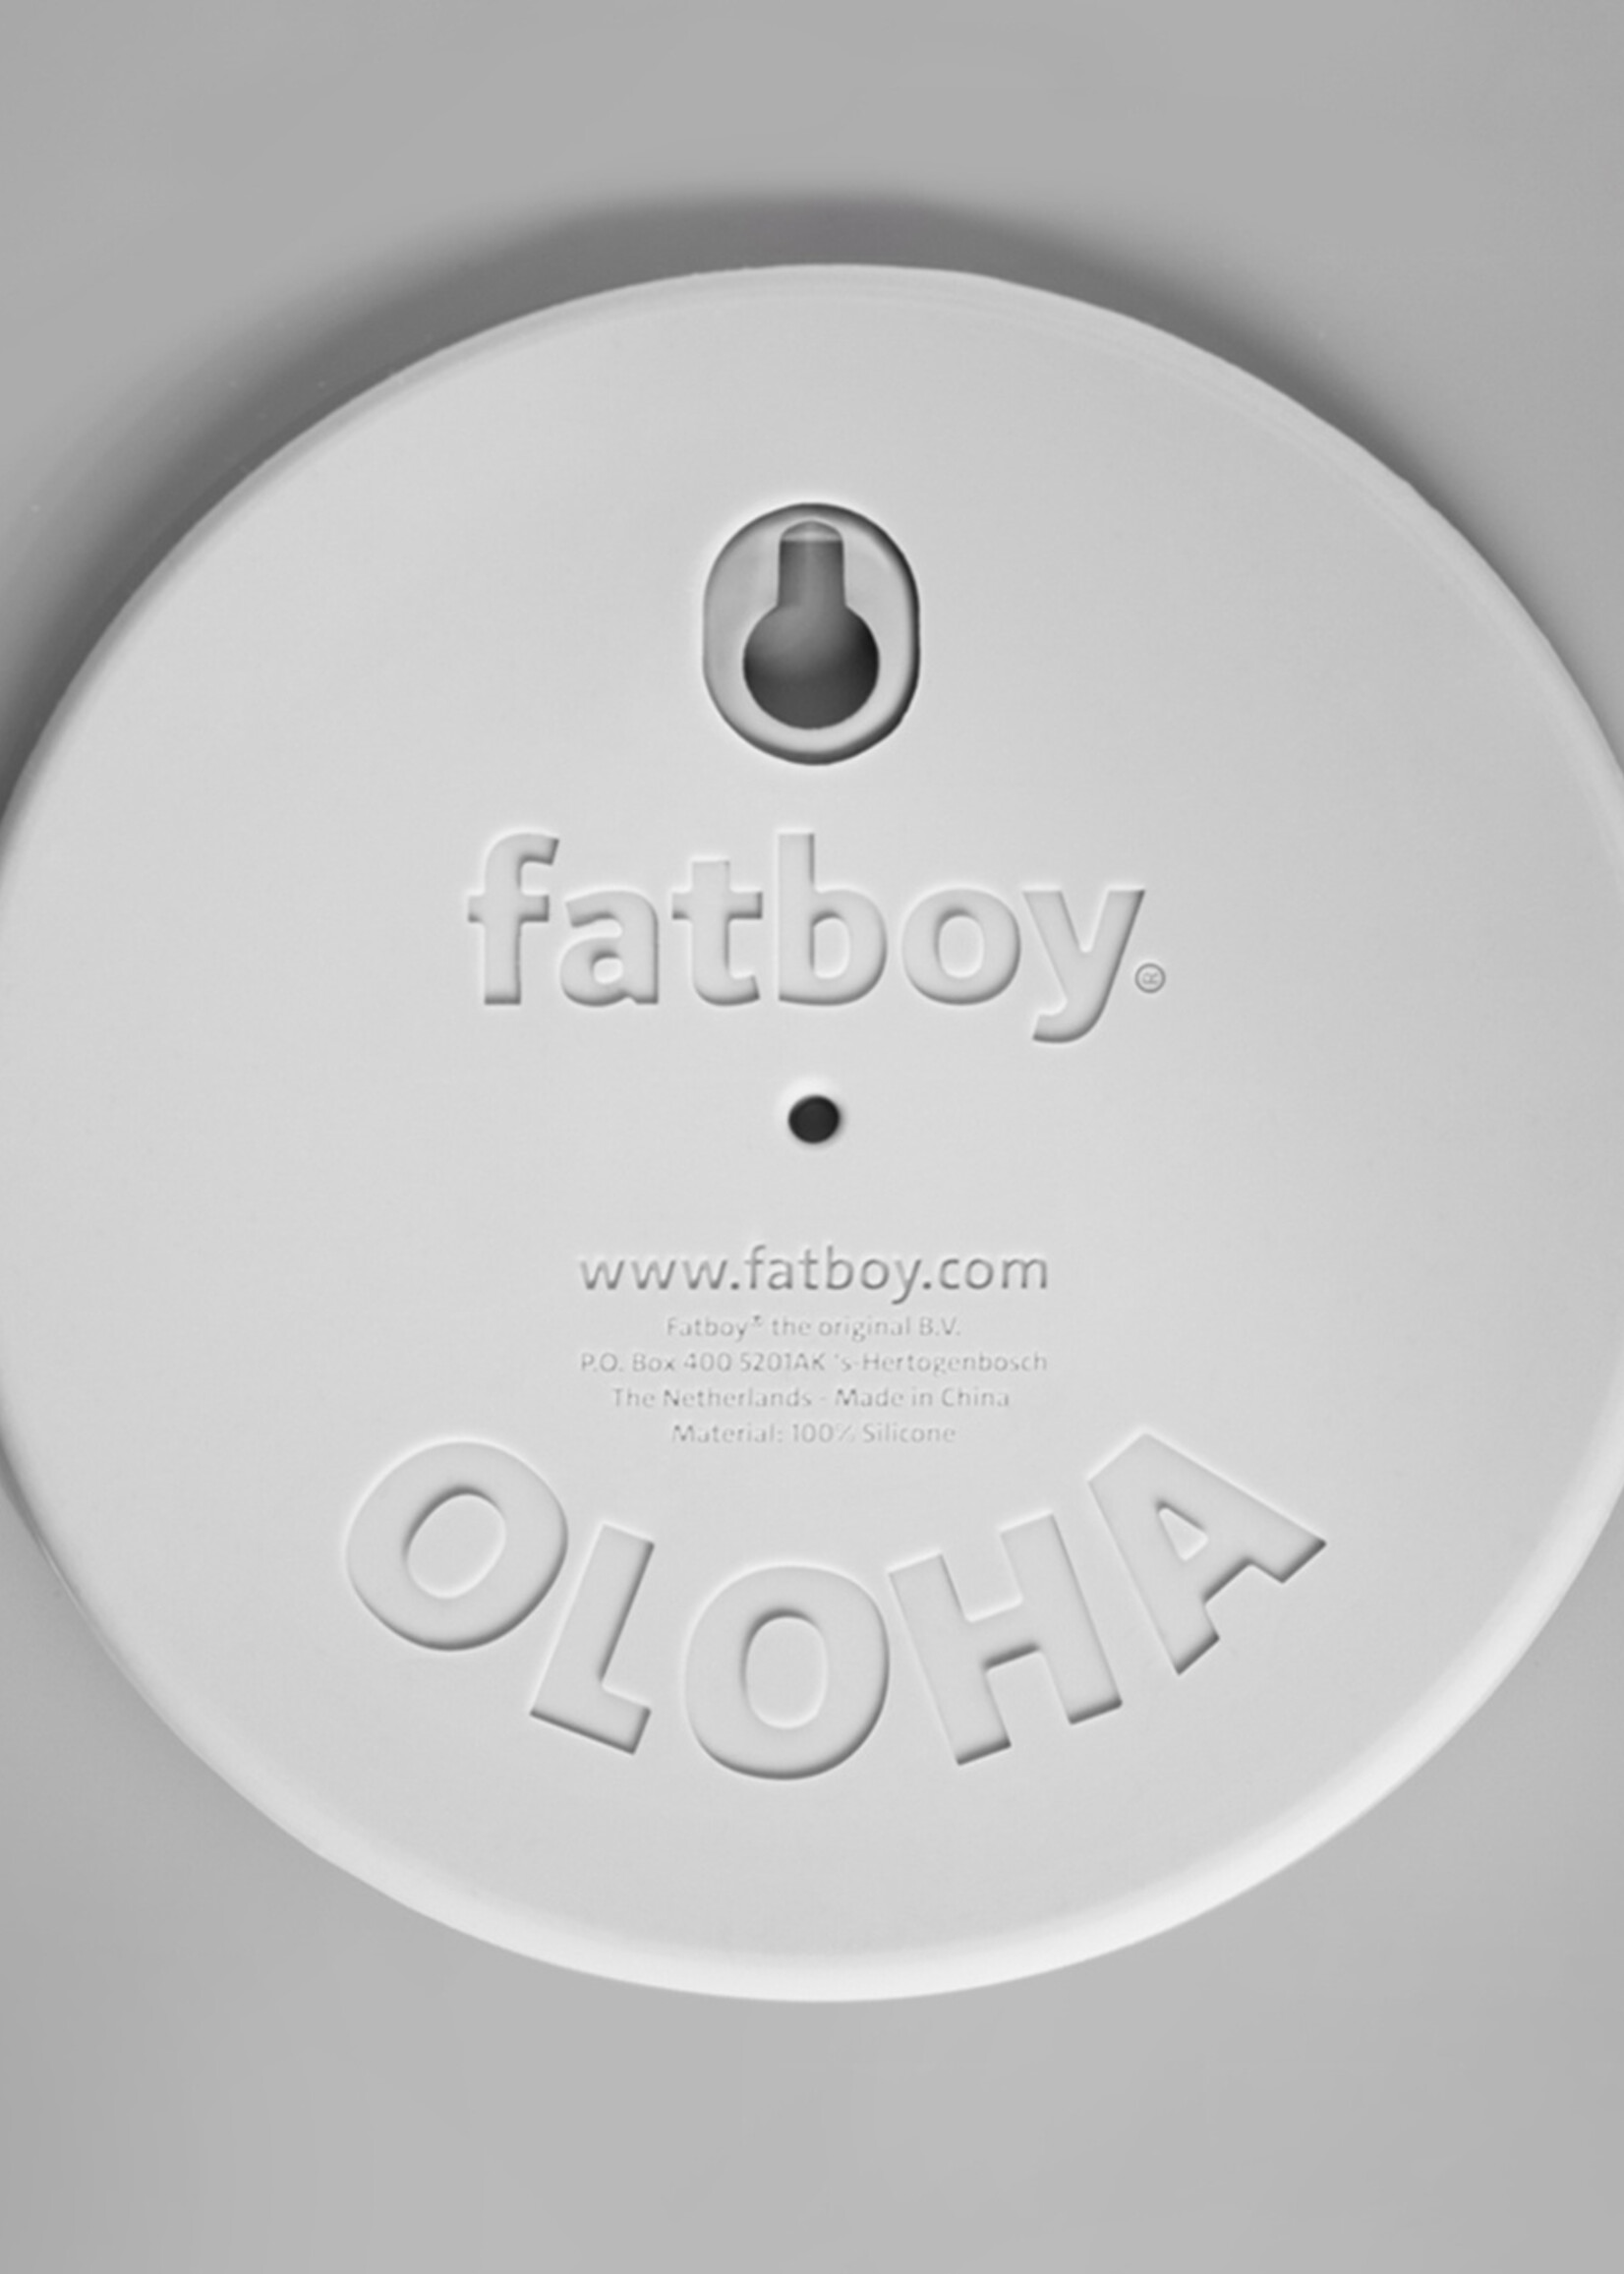 Fatboy Fatboy - Oloha - Lampe - Grand - Désert